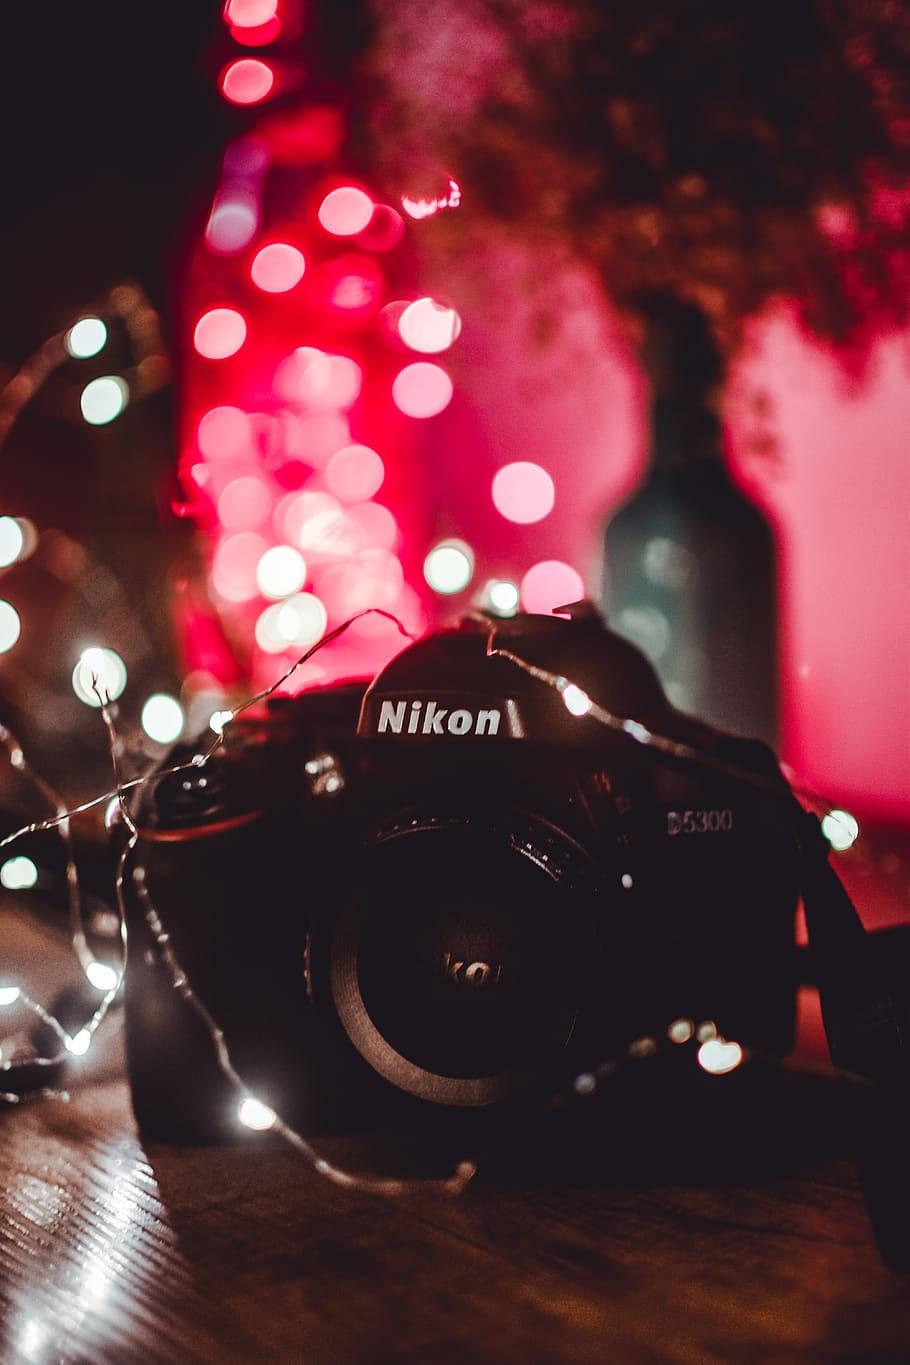 Dslr Blur Nikon Camera Wallpaper